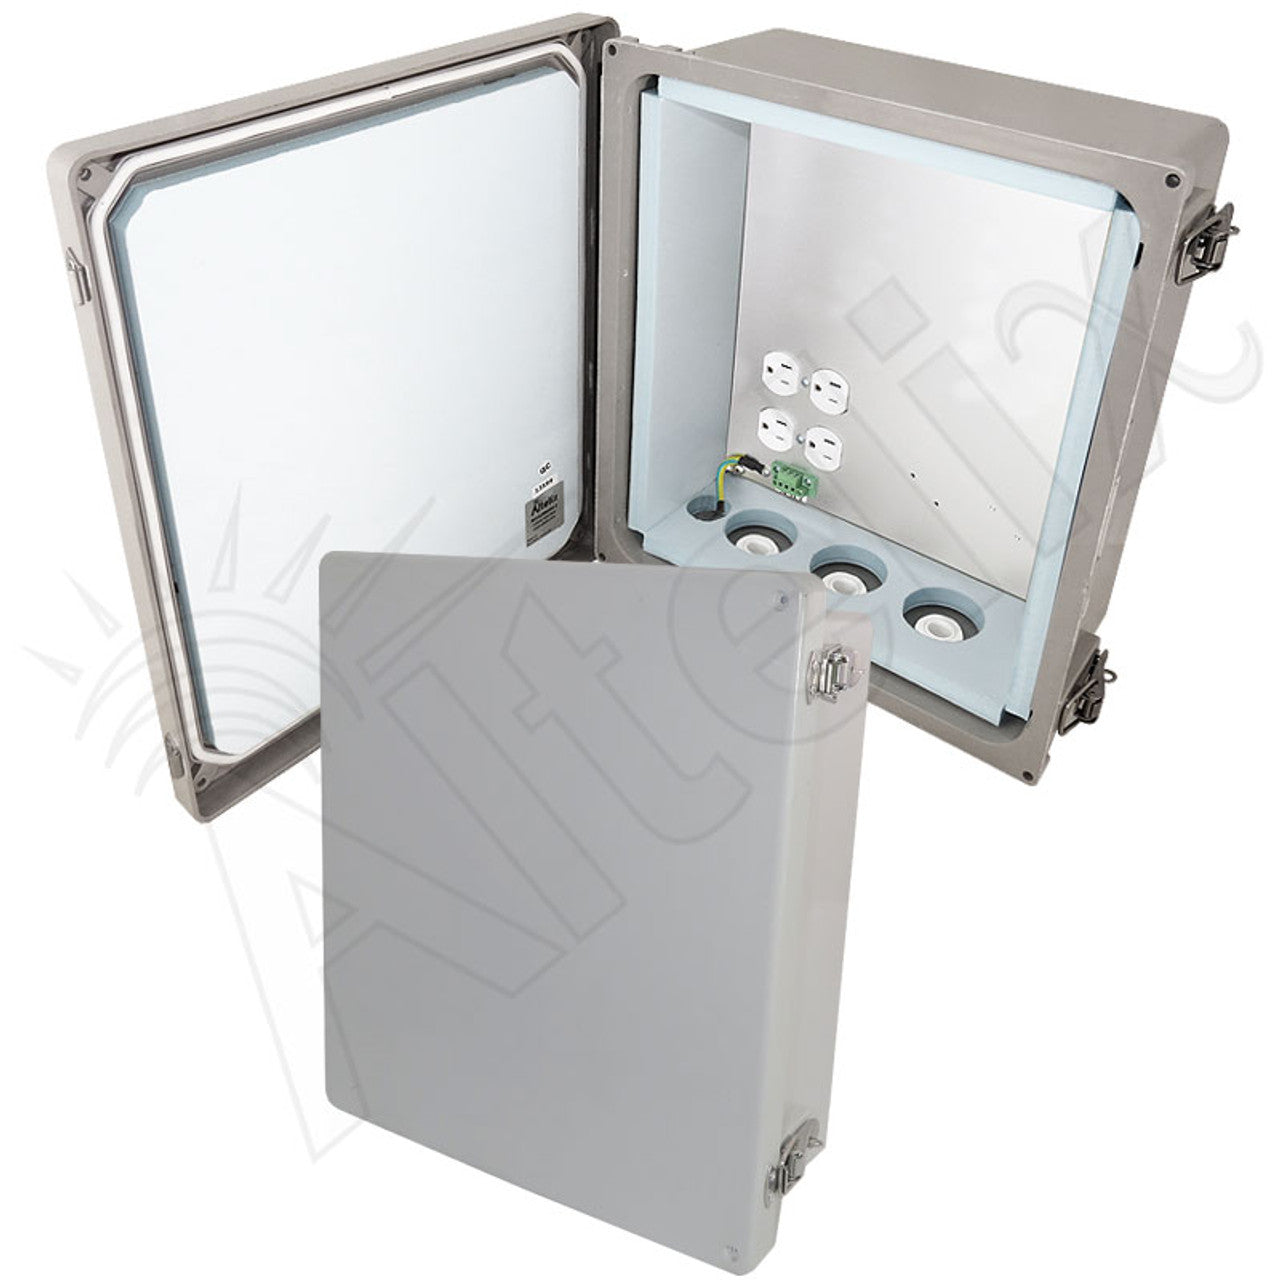 Altelix Insulated Fiberglass Weatherproof NEMA 4X Enclosure with 200W Heater & 120 VAC Outlets